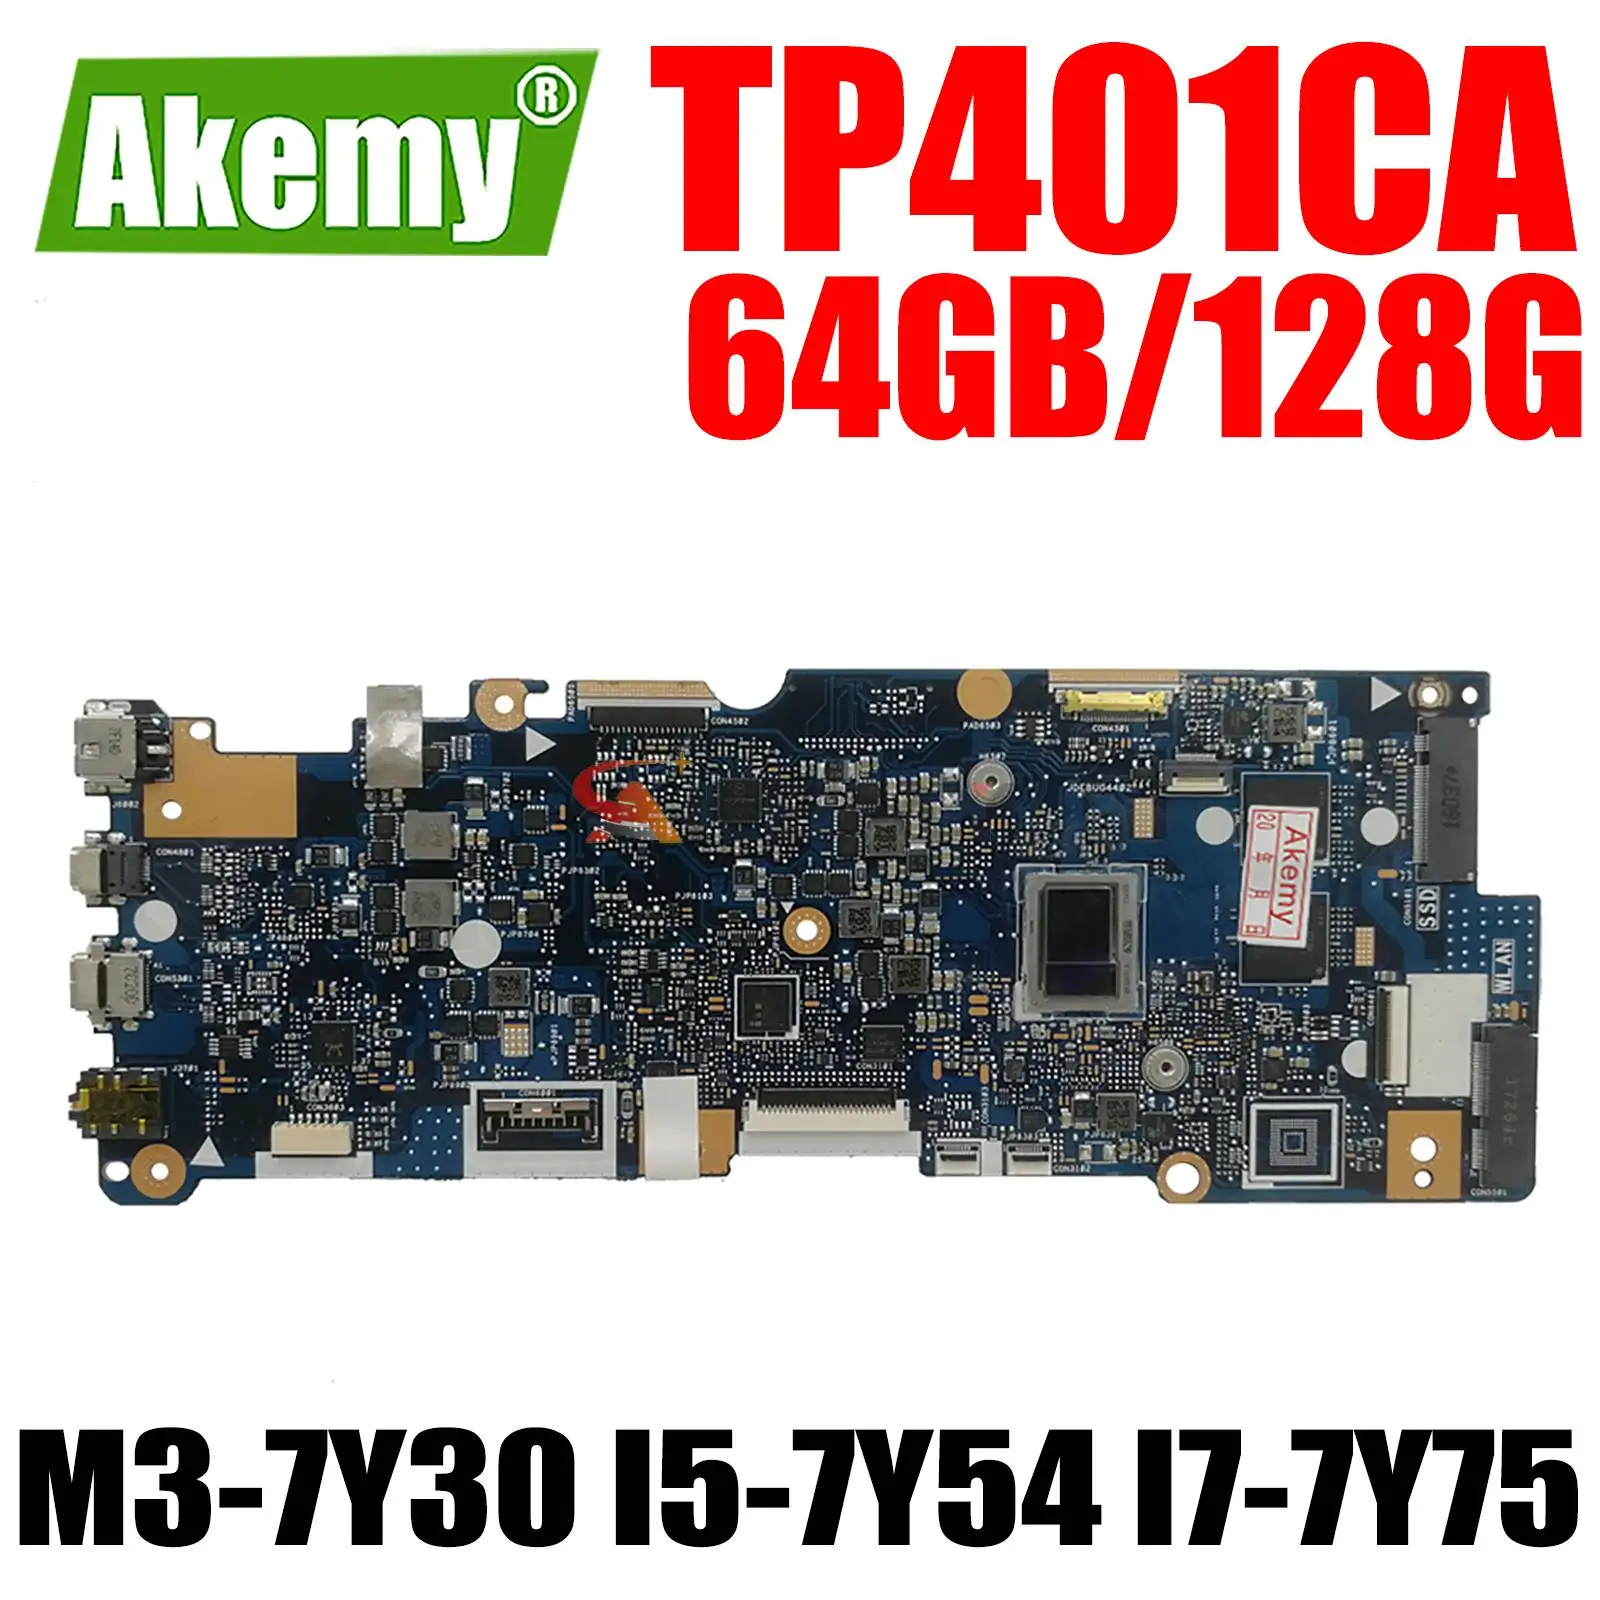 

TP401CA Notebook Mainboard M3-7Y30 I5-7Y54 I7-7Y75 CPU 64GB 128G SSD for ASUS VivoBook 14 TP401C TP401CAE Laptop Motherboard